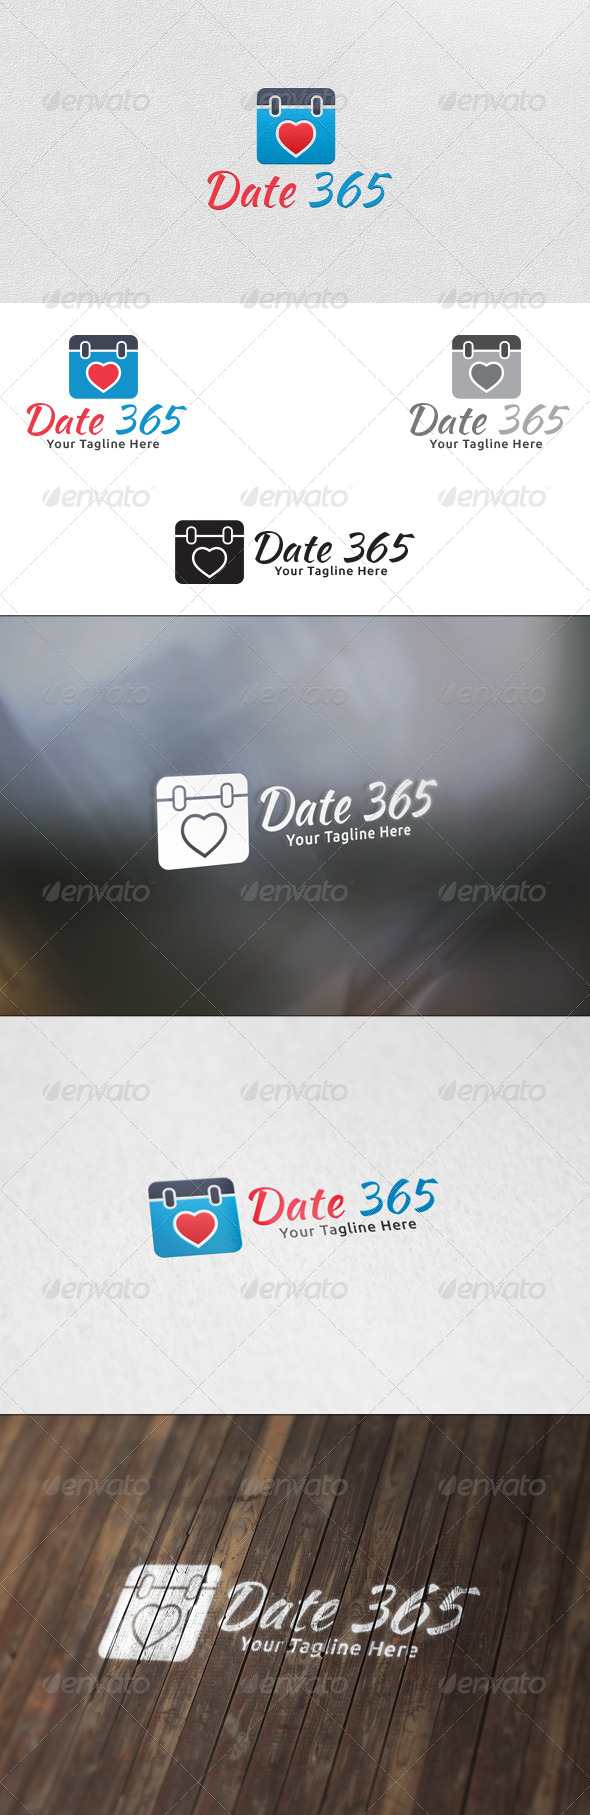 Date 365 - Logo Template